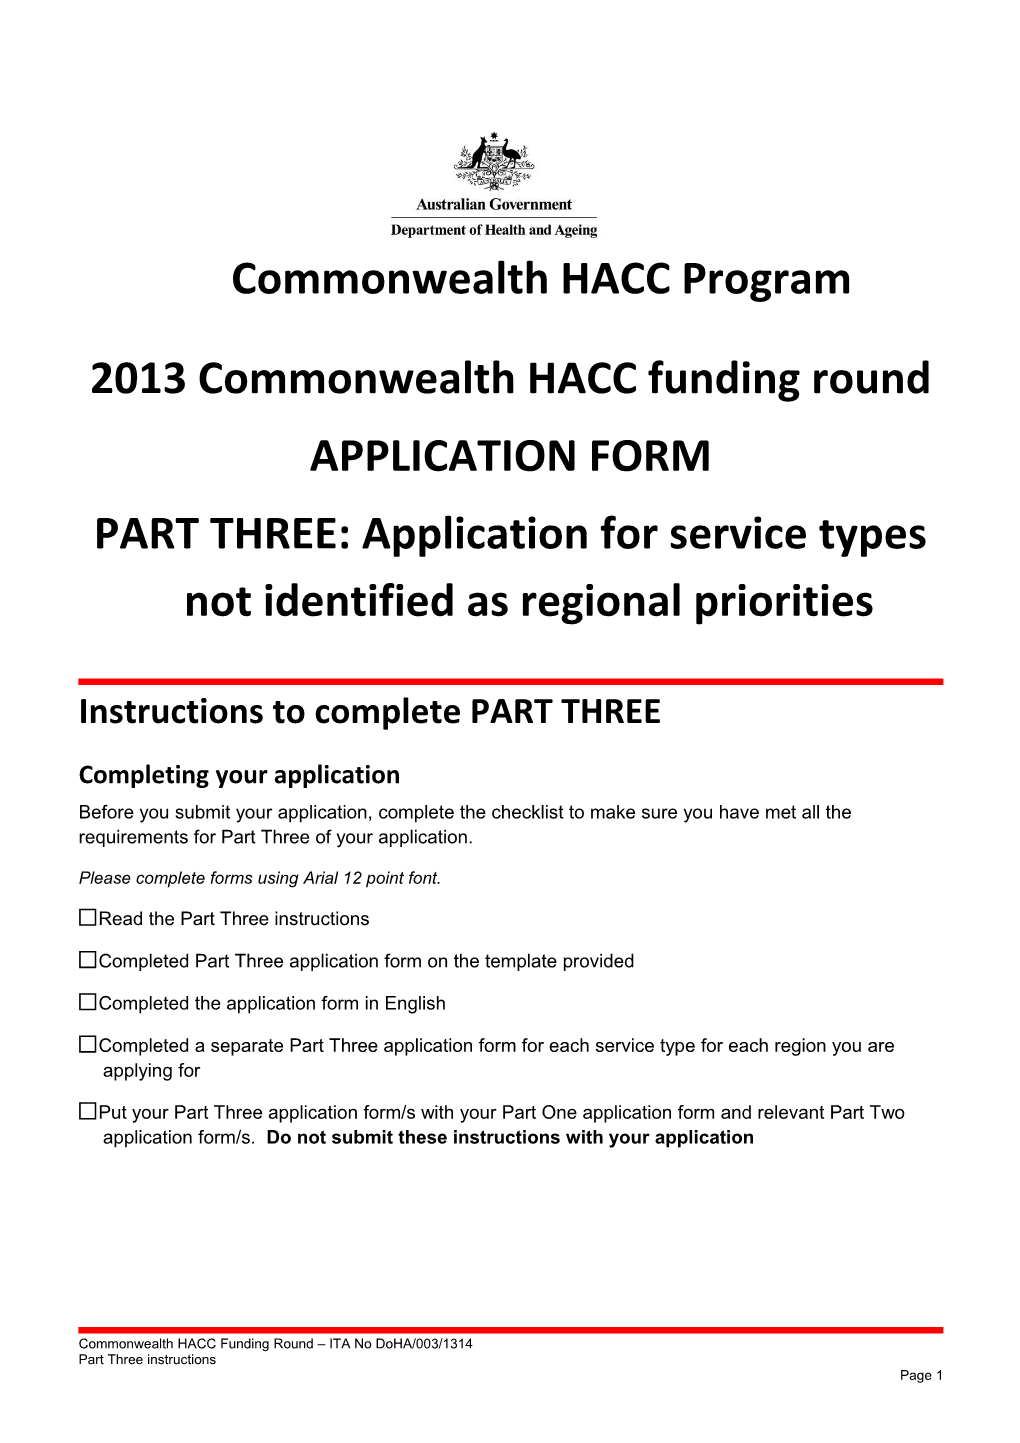 2013 Commonwealth HACC Funding Round